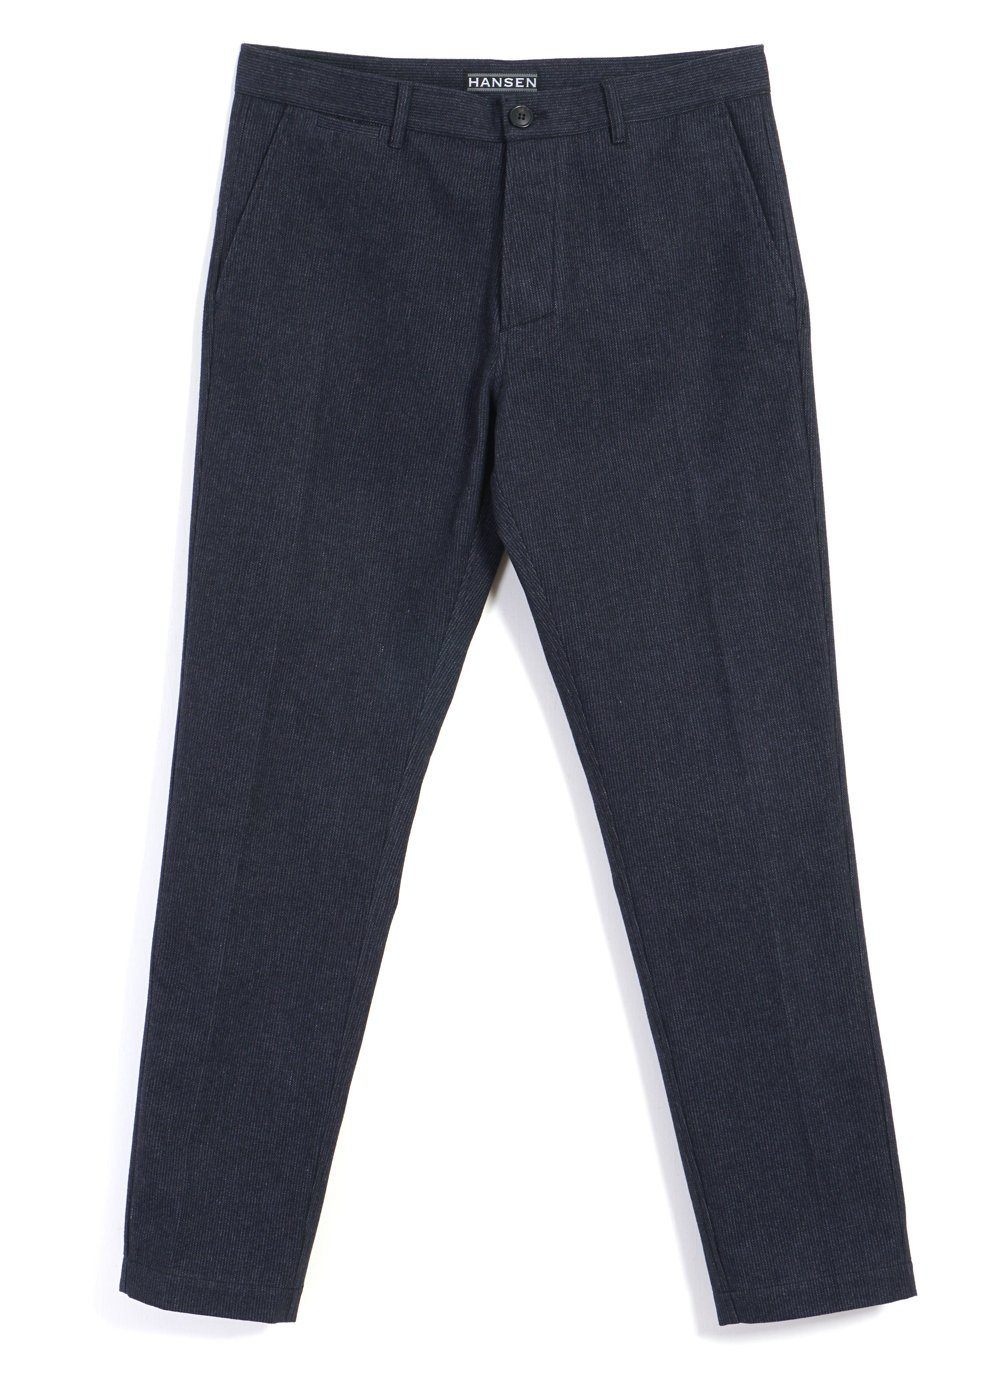 HANSEN GARMENTS - FRED | Regular Fit Trousers | Brushed Blue - HANSEN Garments